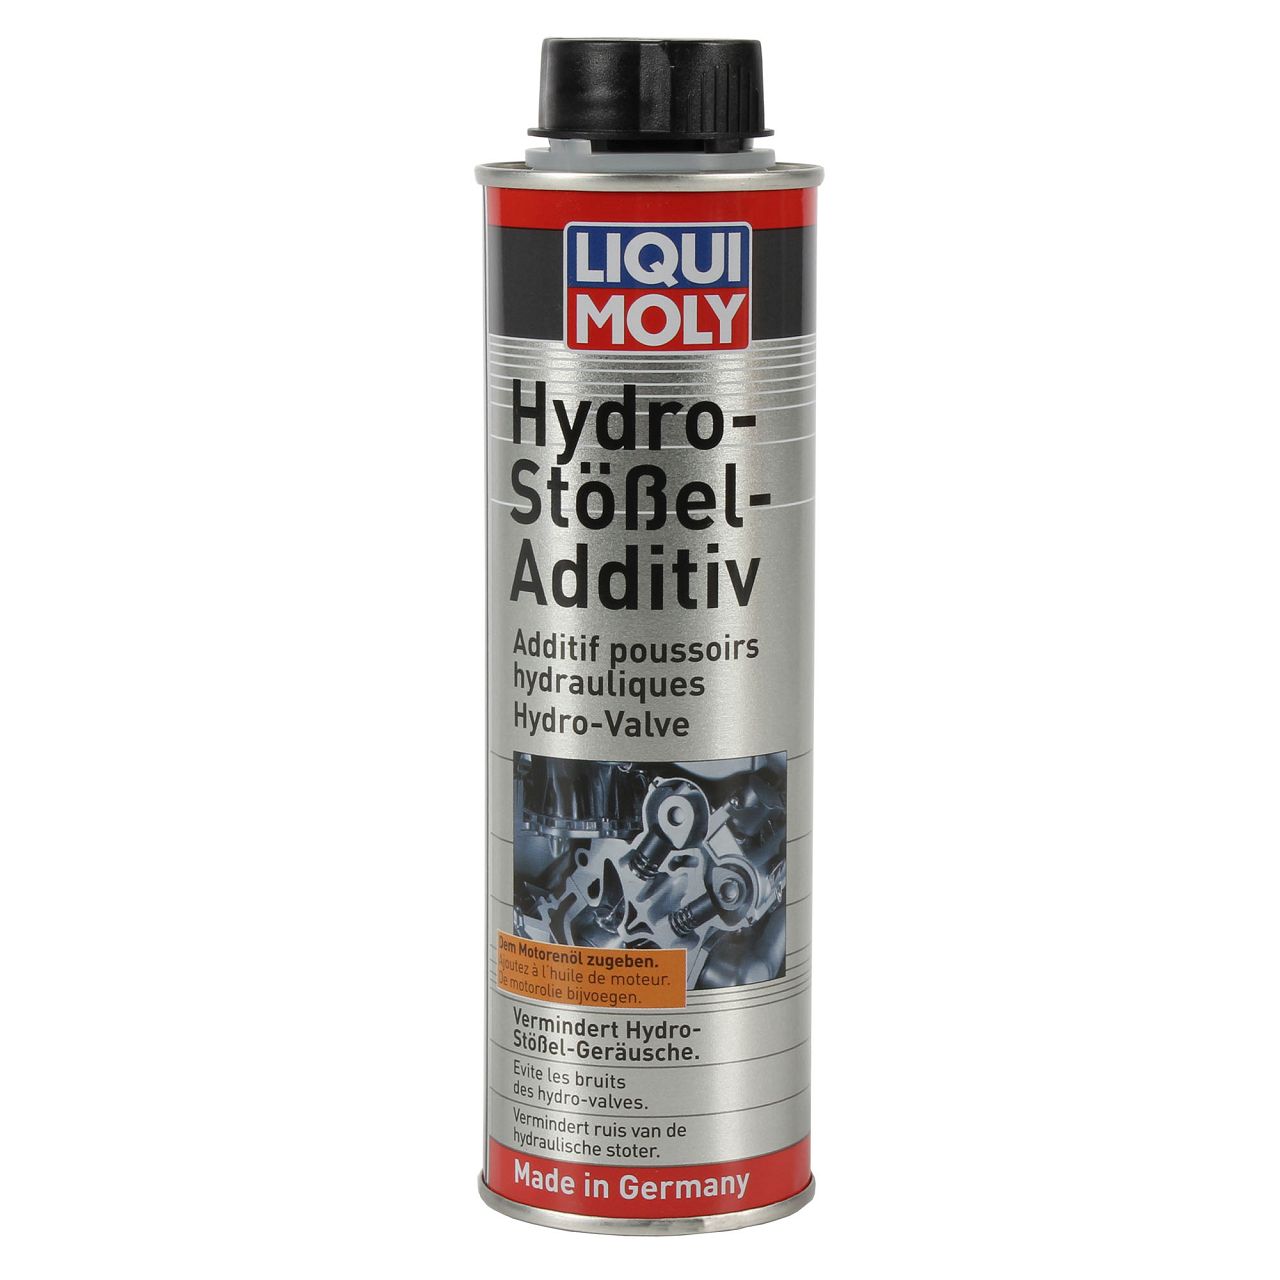 LIQUI MOLY 1009 Hydro-Stößel-Additiv Hydrostößel Reiniger Öl Additiv 300ml